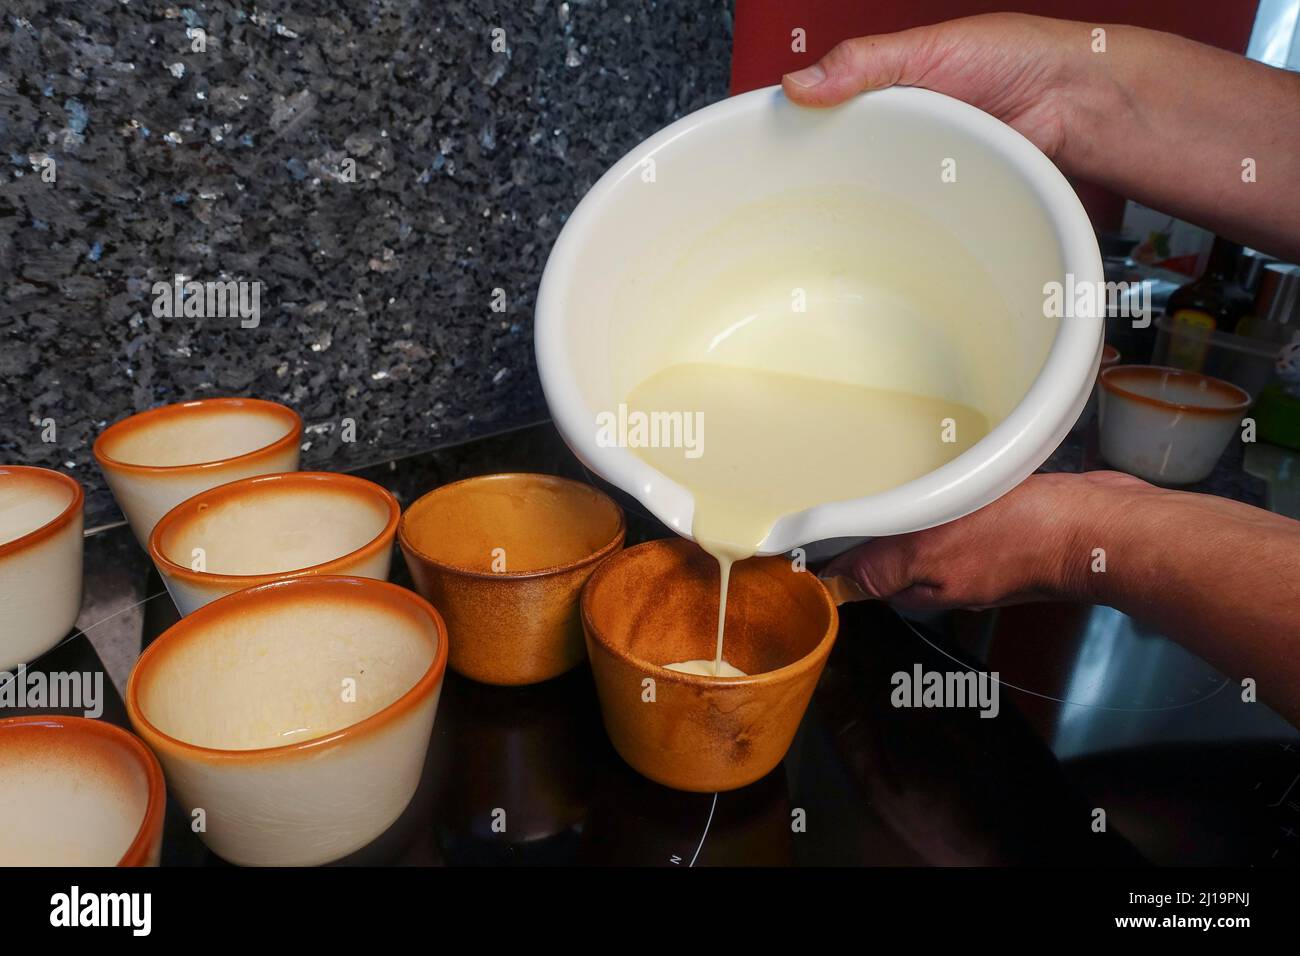 Swabian cuisine, preparing Pfitzauf, pouring dough into bowls, men's hands, mixing bowl, Germany, Europe Stock Photo